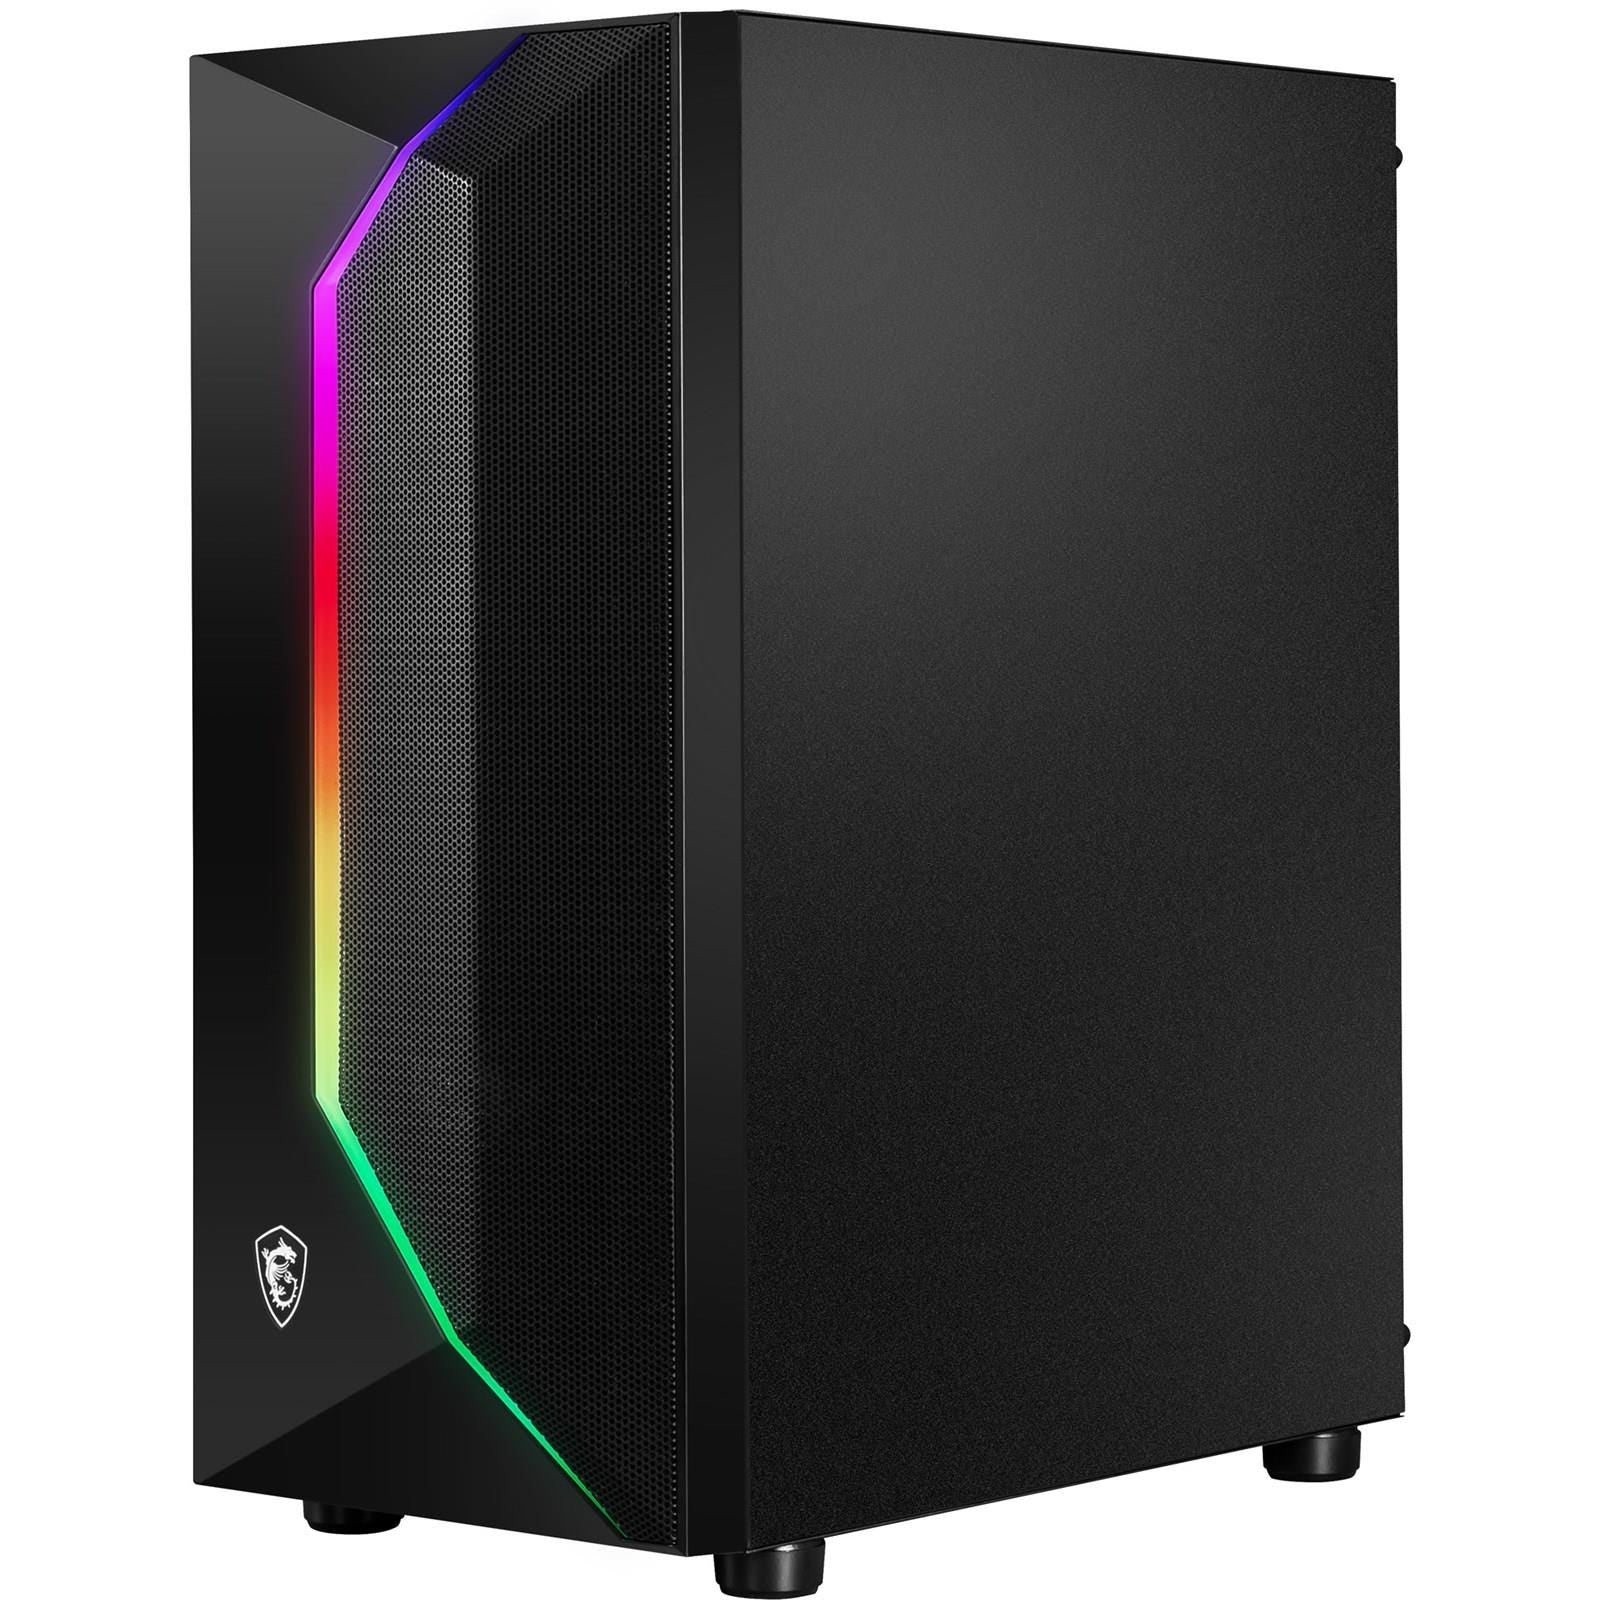 MSI MAG VAMPIRIC 100R RGB ATX Mid Tower PC Case - Black